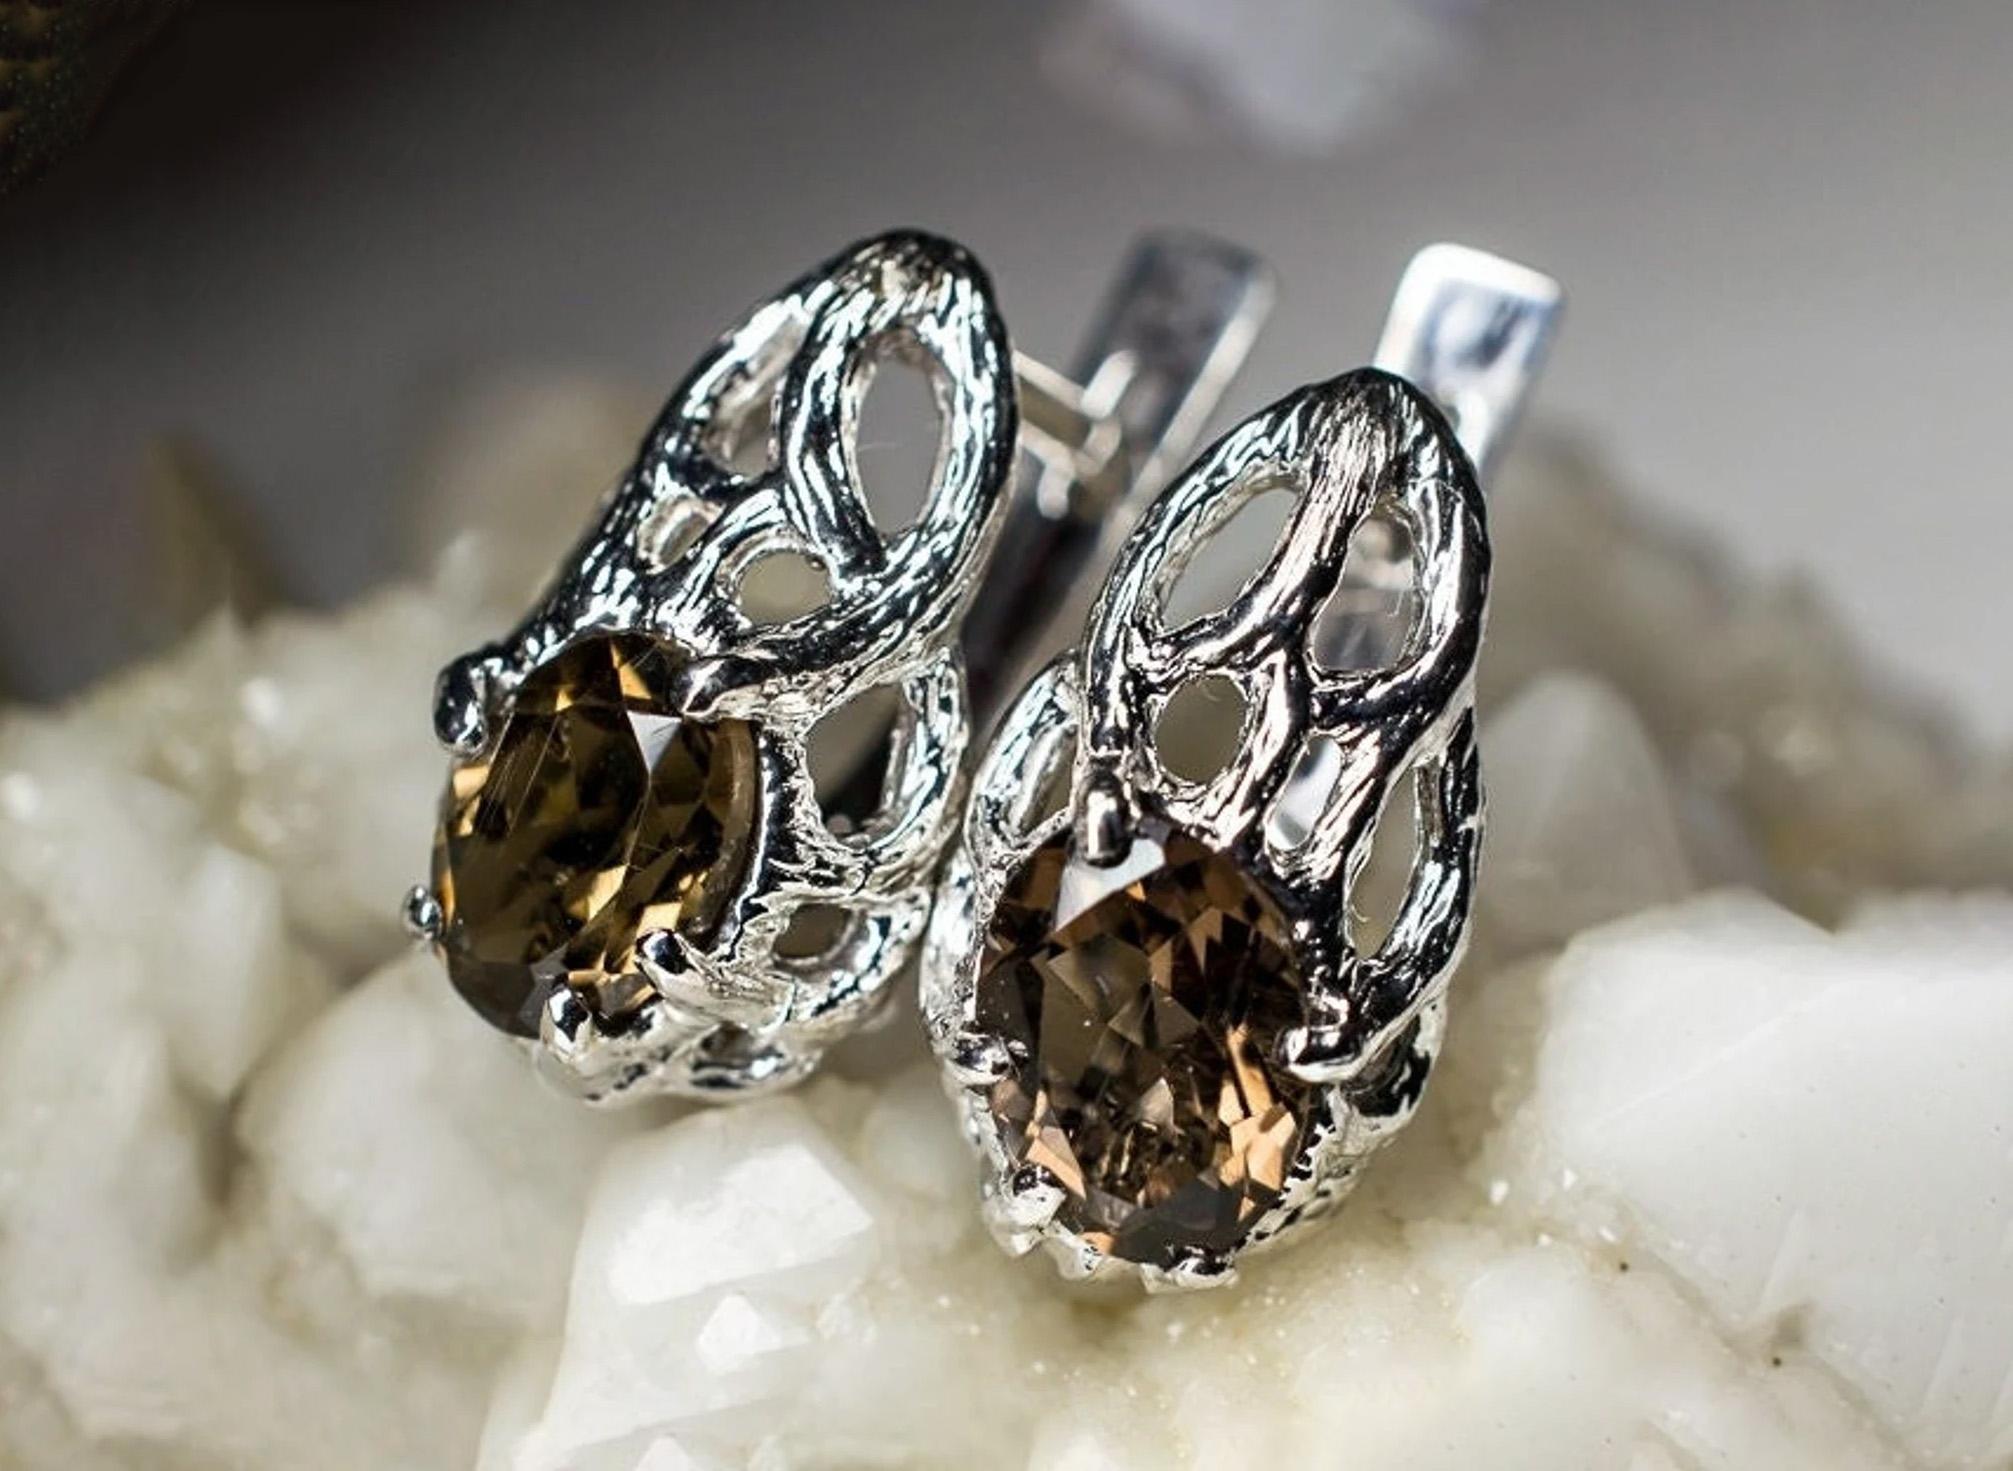 Silver earrings with natural smoky Quartz classic oval cut
smoky quartz origin - Brazil
stone measurements - 0.12 х 0.2 х 0.28 in / 3 х 5 х 7 mm
earrings weight - 3.49 grams
earrings height - 0.67 in / 17 mm
stone weight - 1.48 carats
